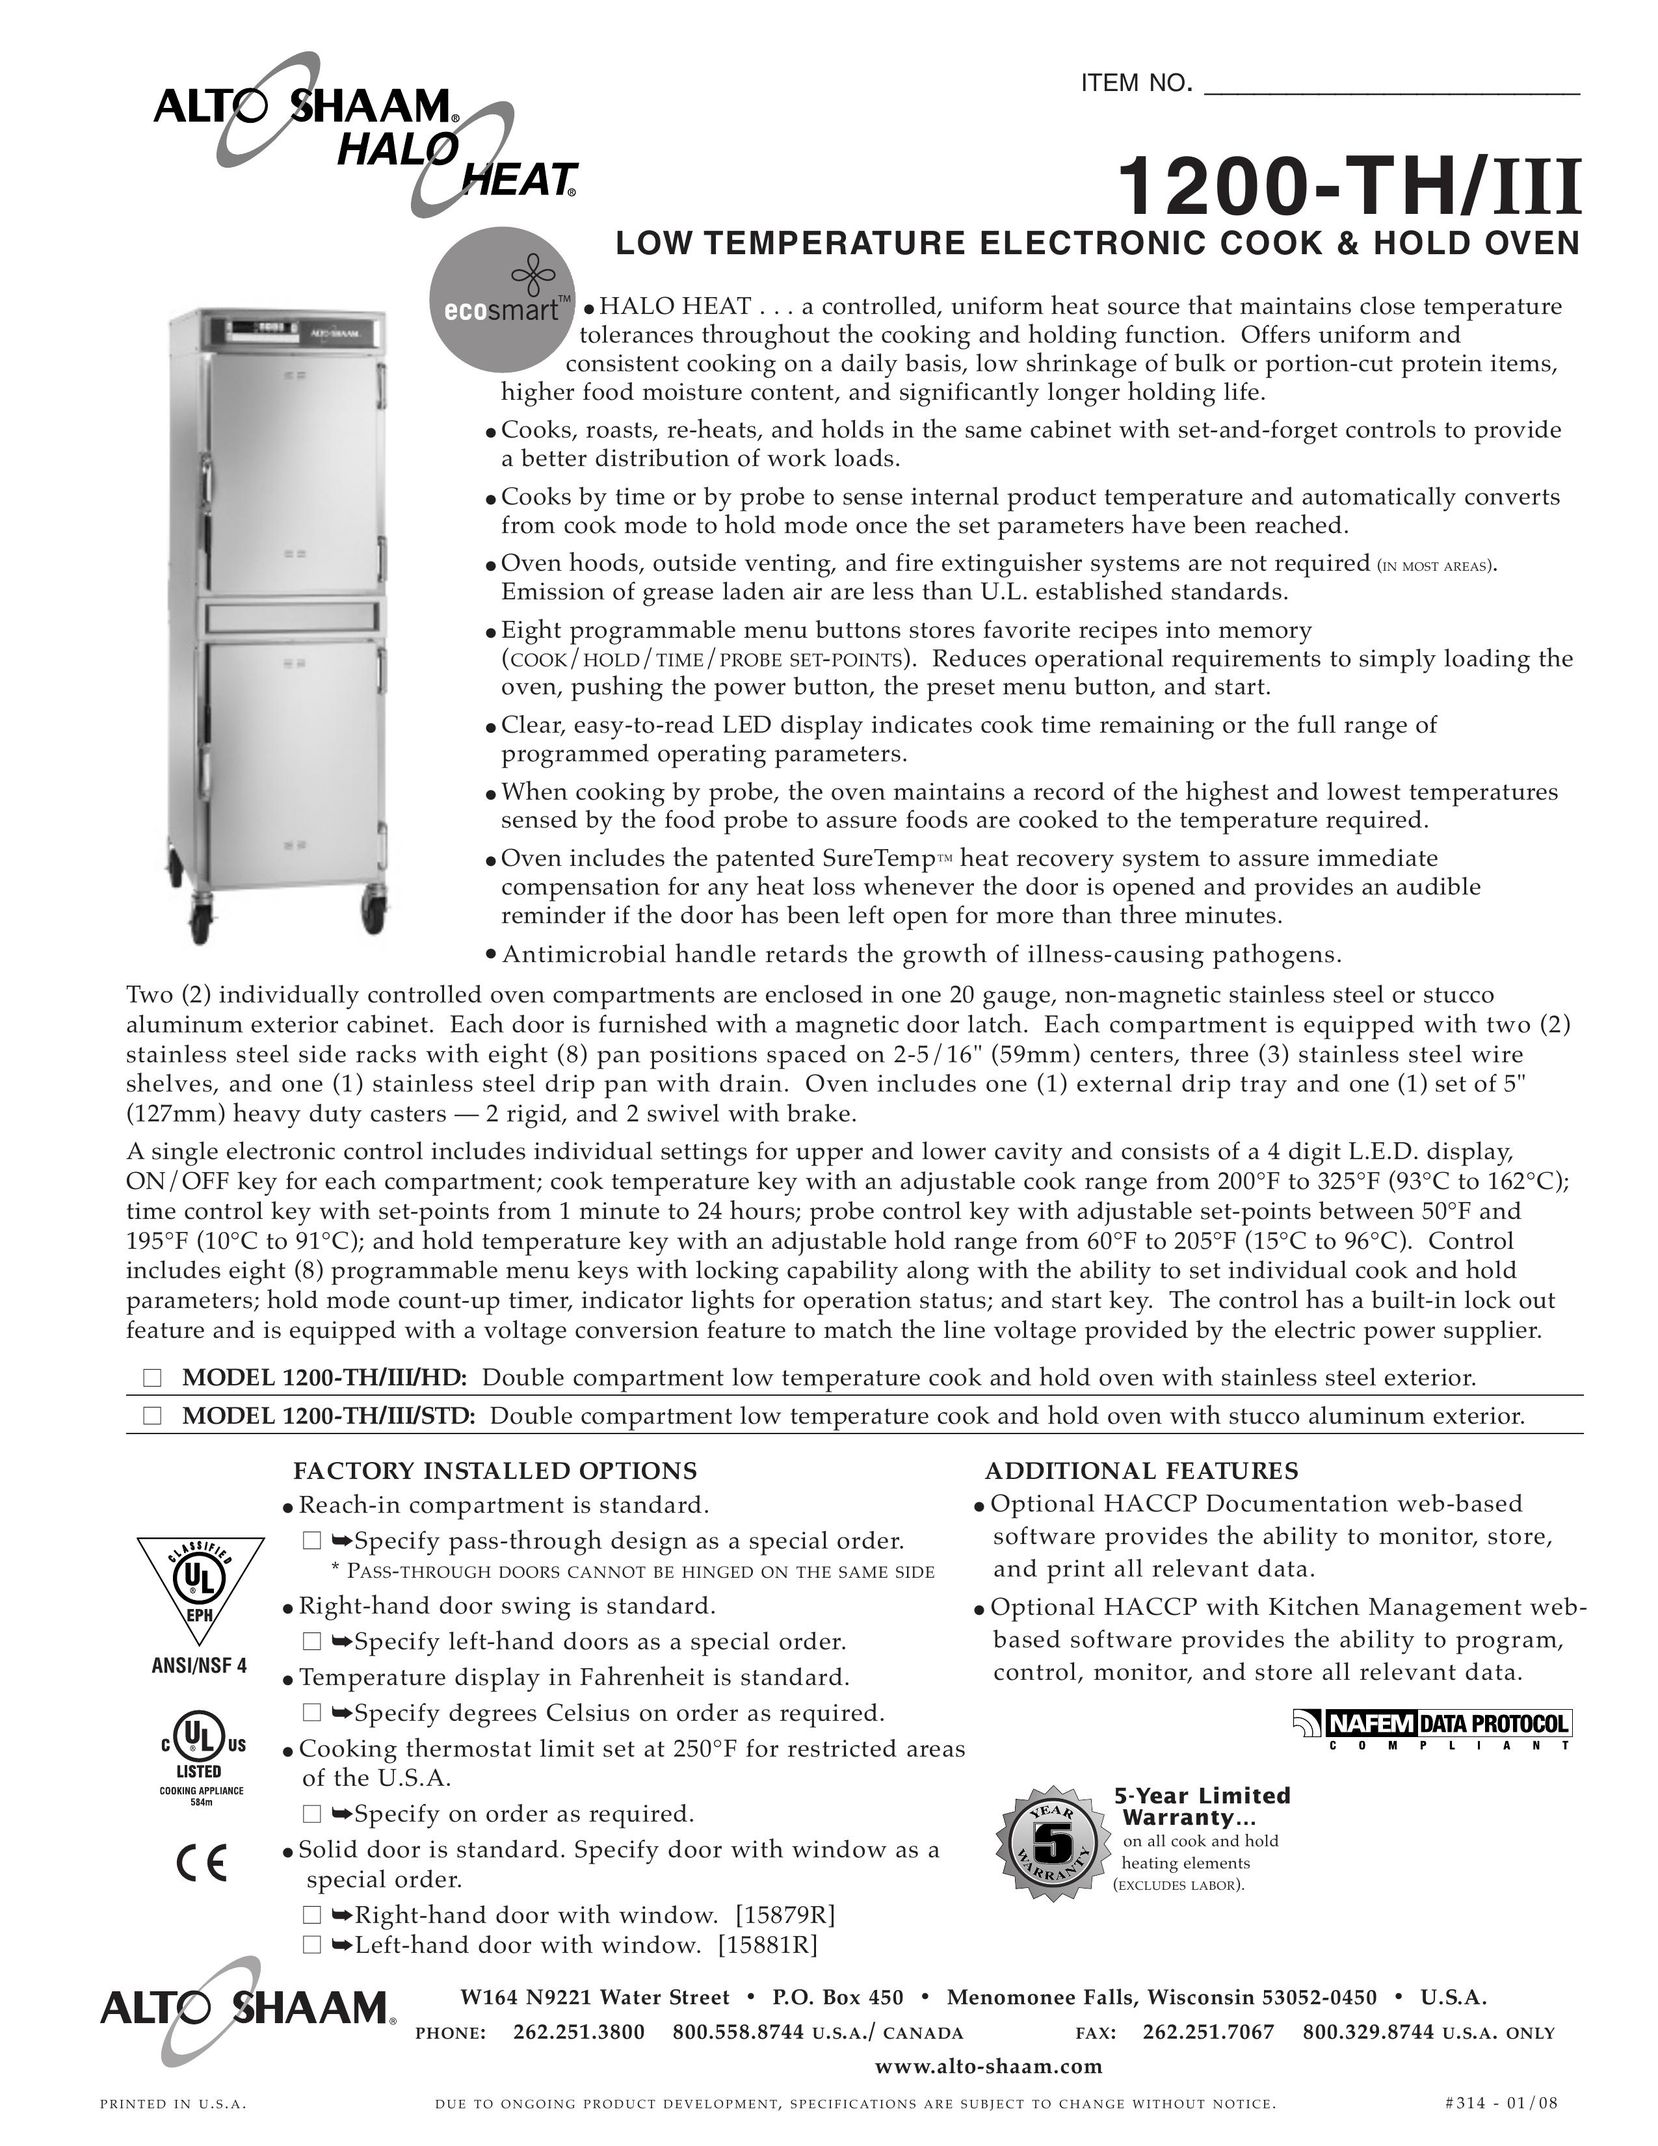 Alto-Shaam 1200-TH/III/STD Oven User Manual